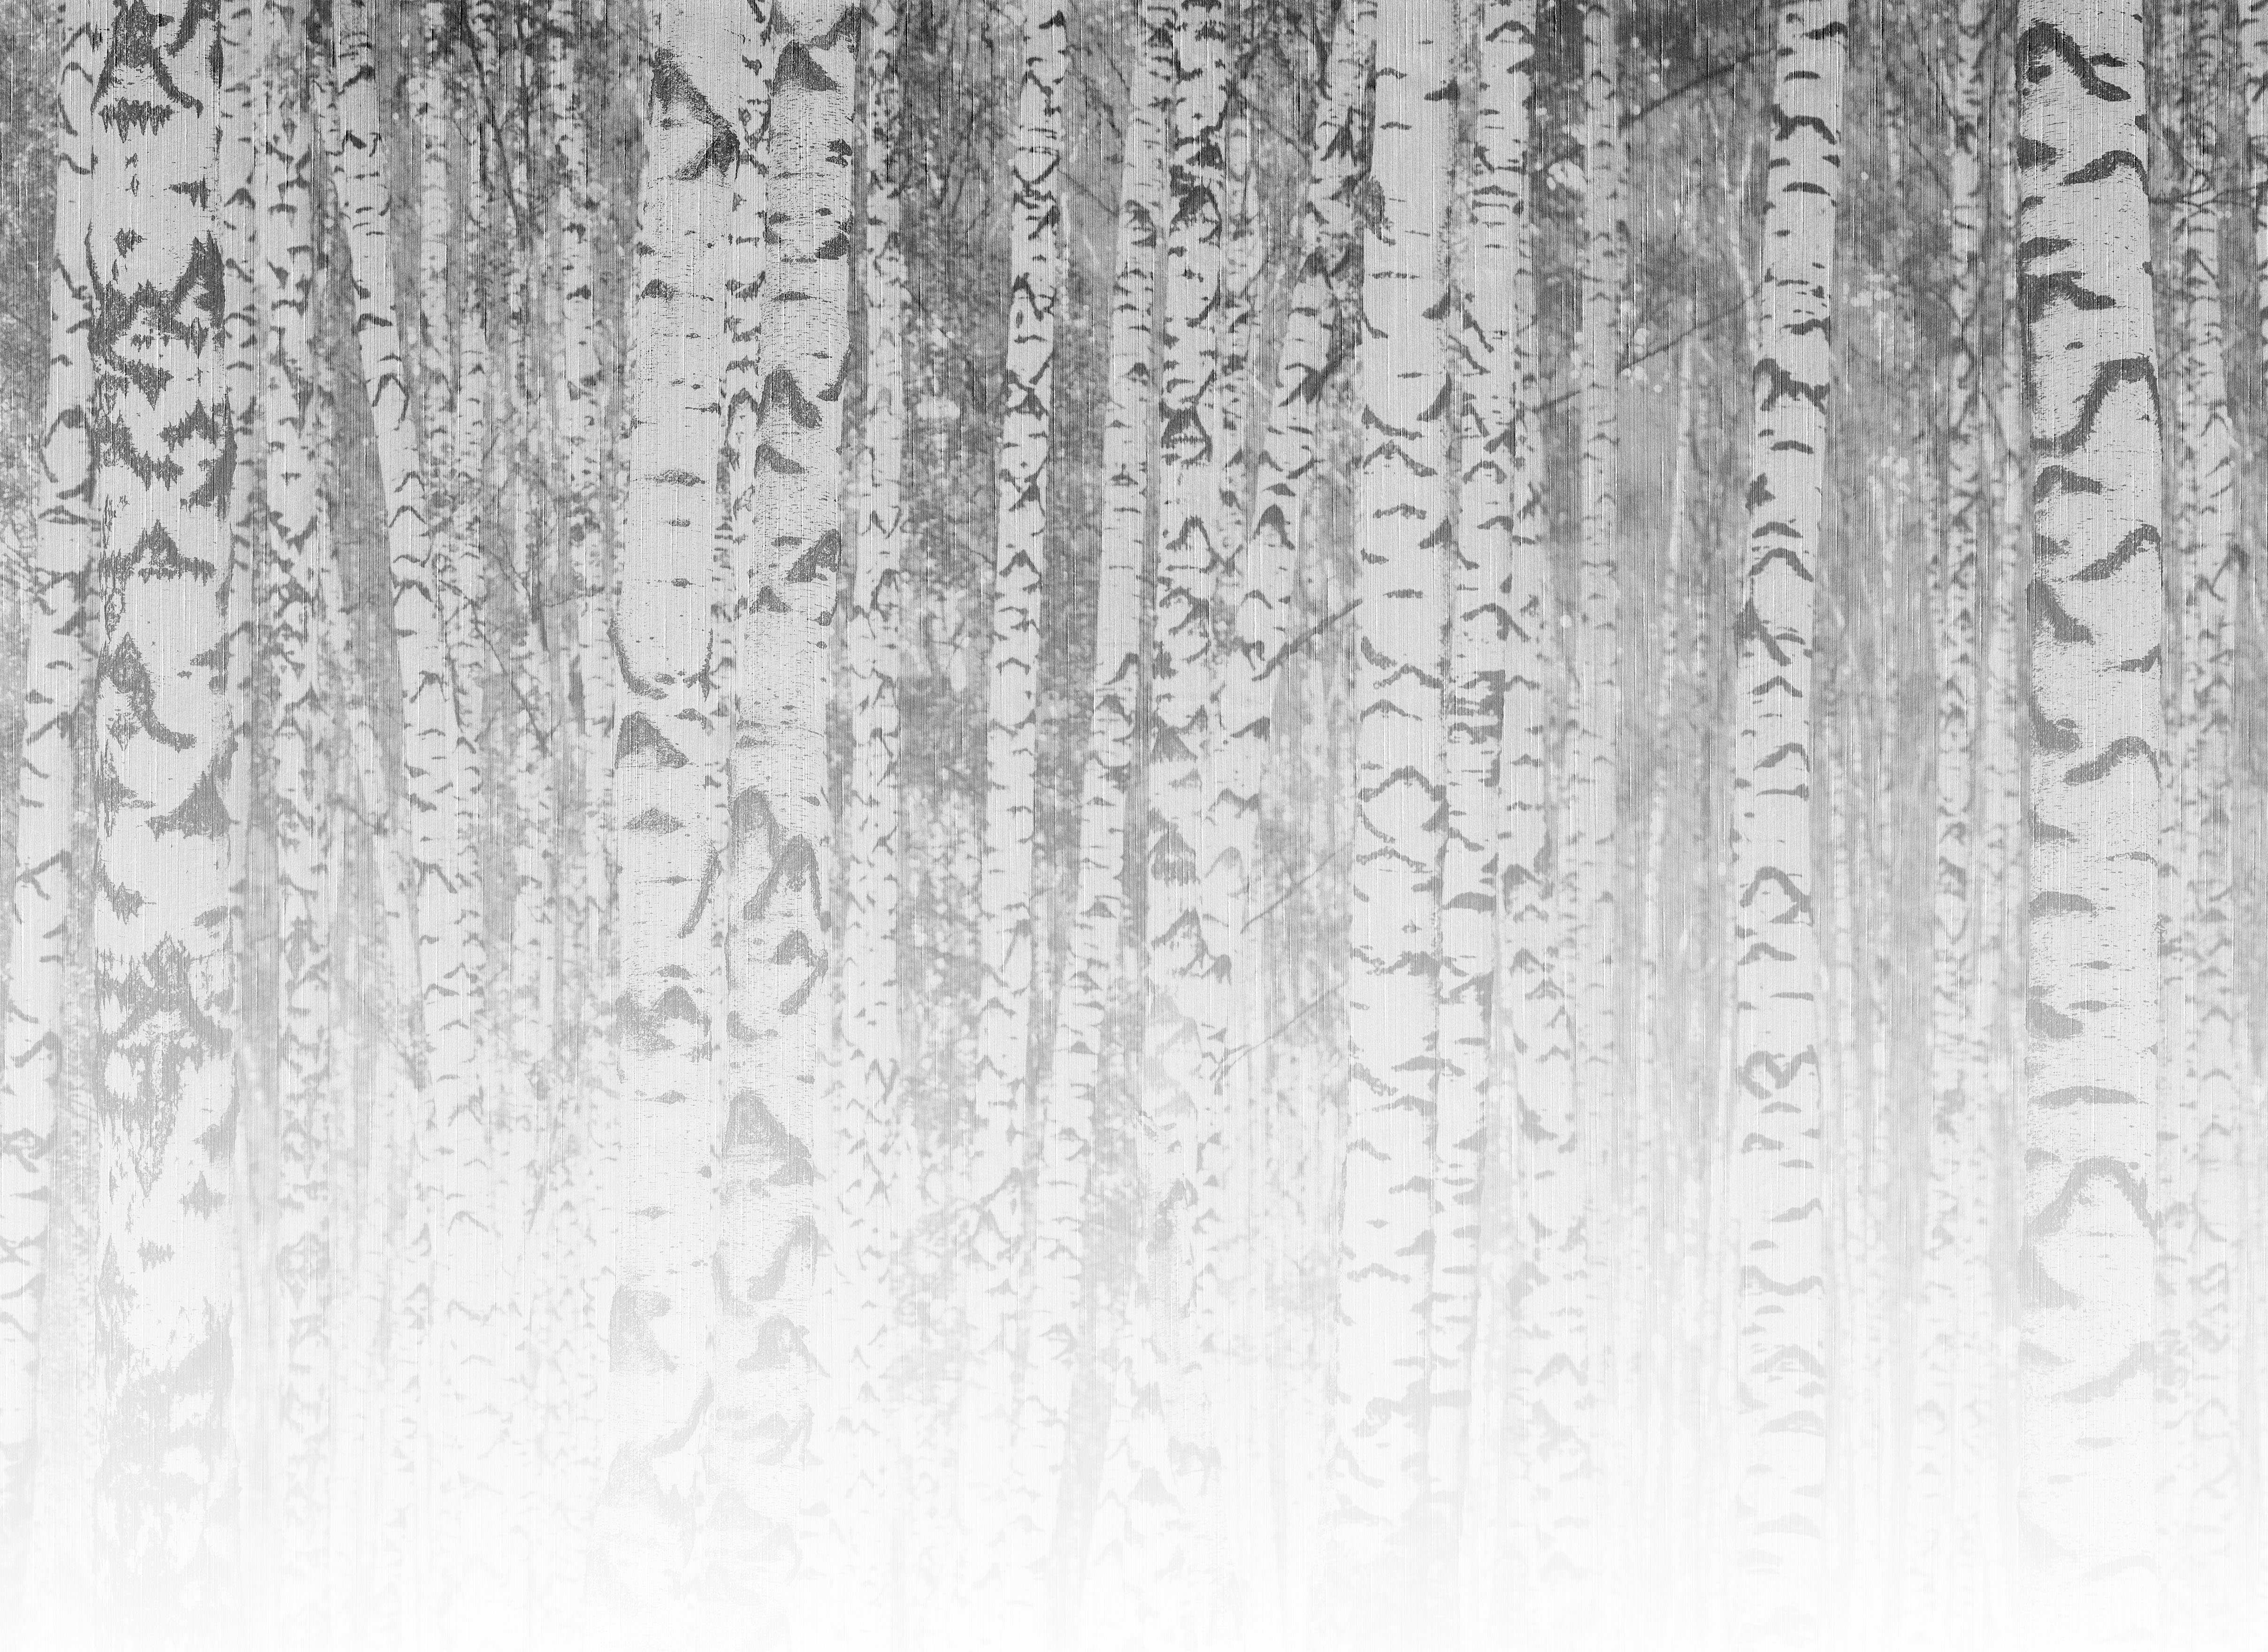 FOTOTAPETE BirchForest1 by AS CREATION